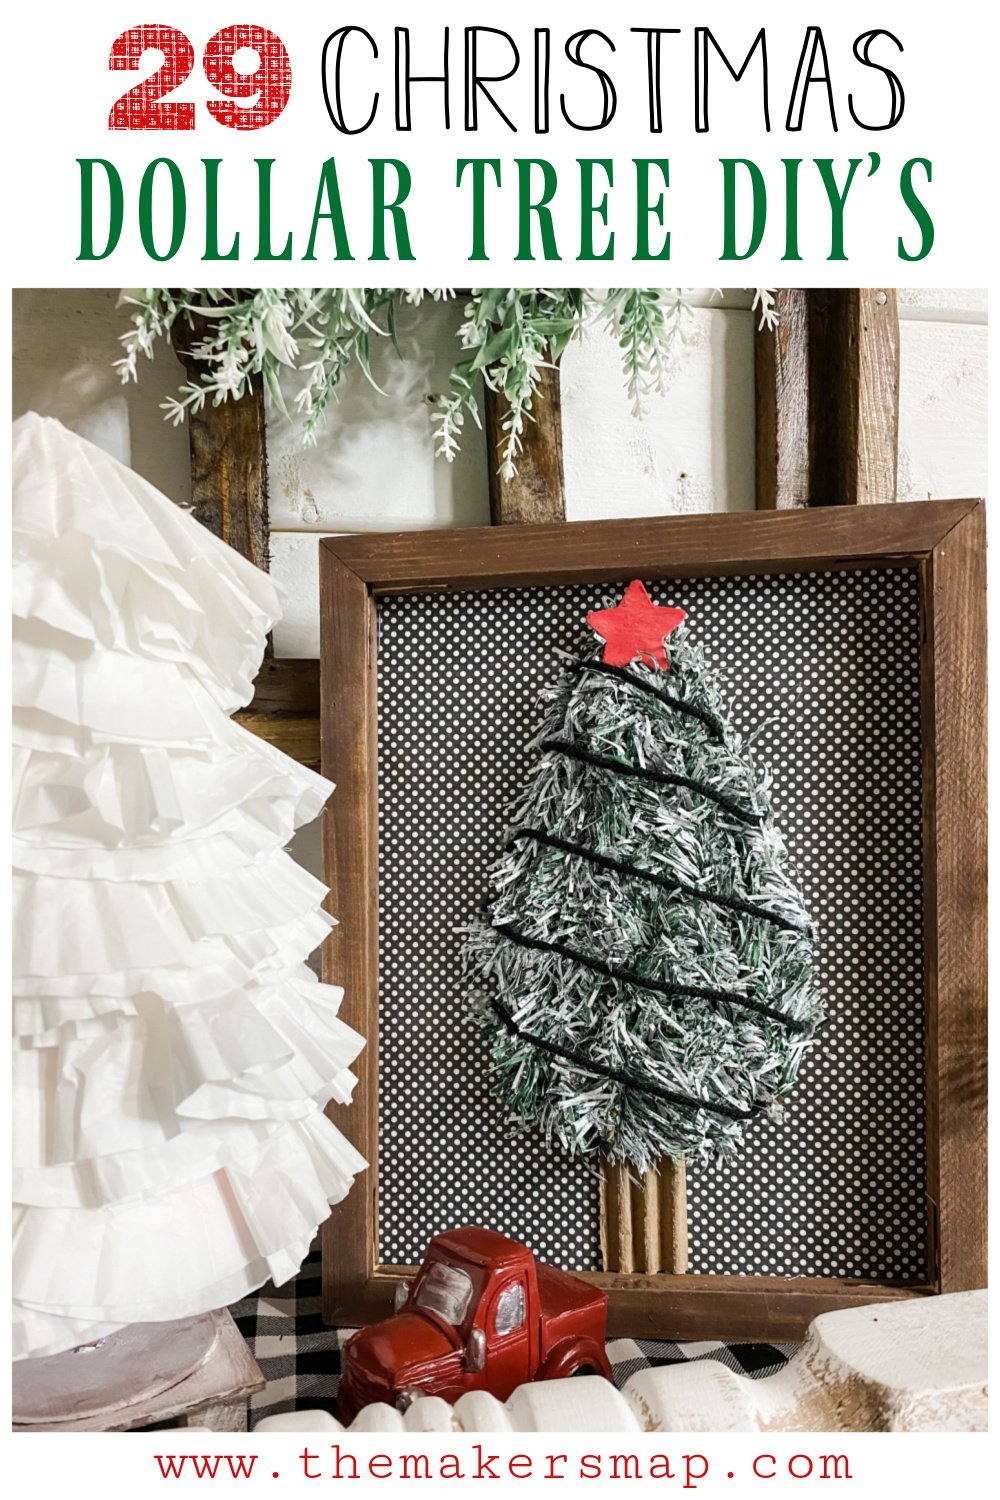 How to make DIY Christmas decorations